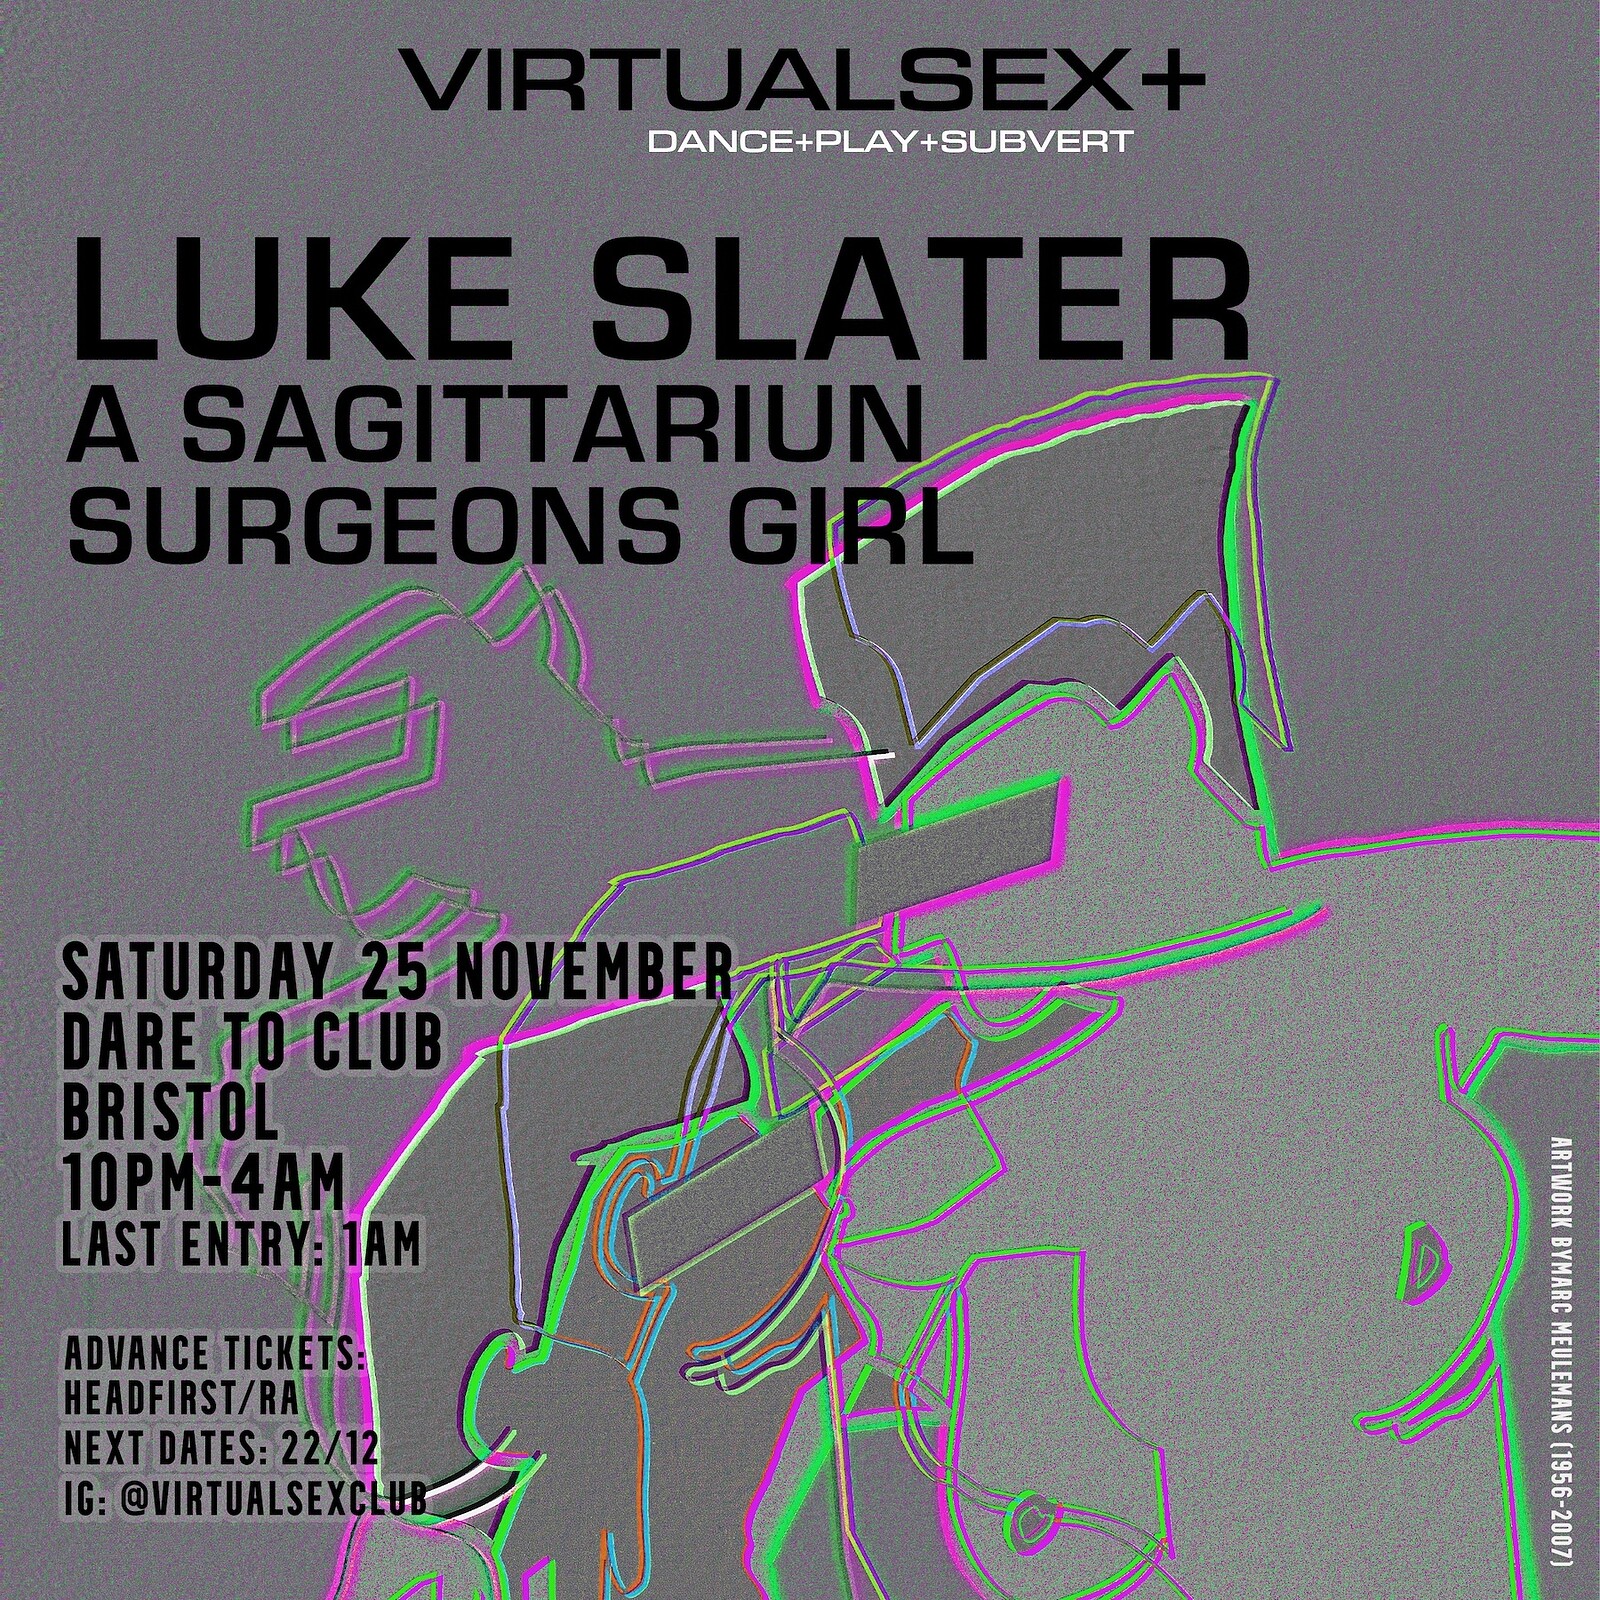 VIRTUALSEX+ with Luke Slater at Dare to Club